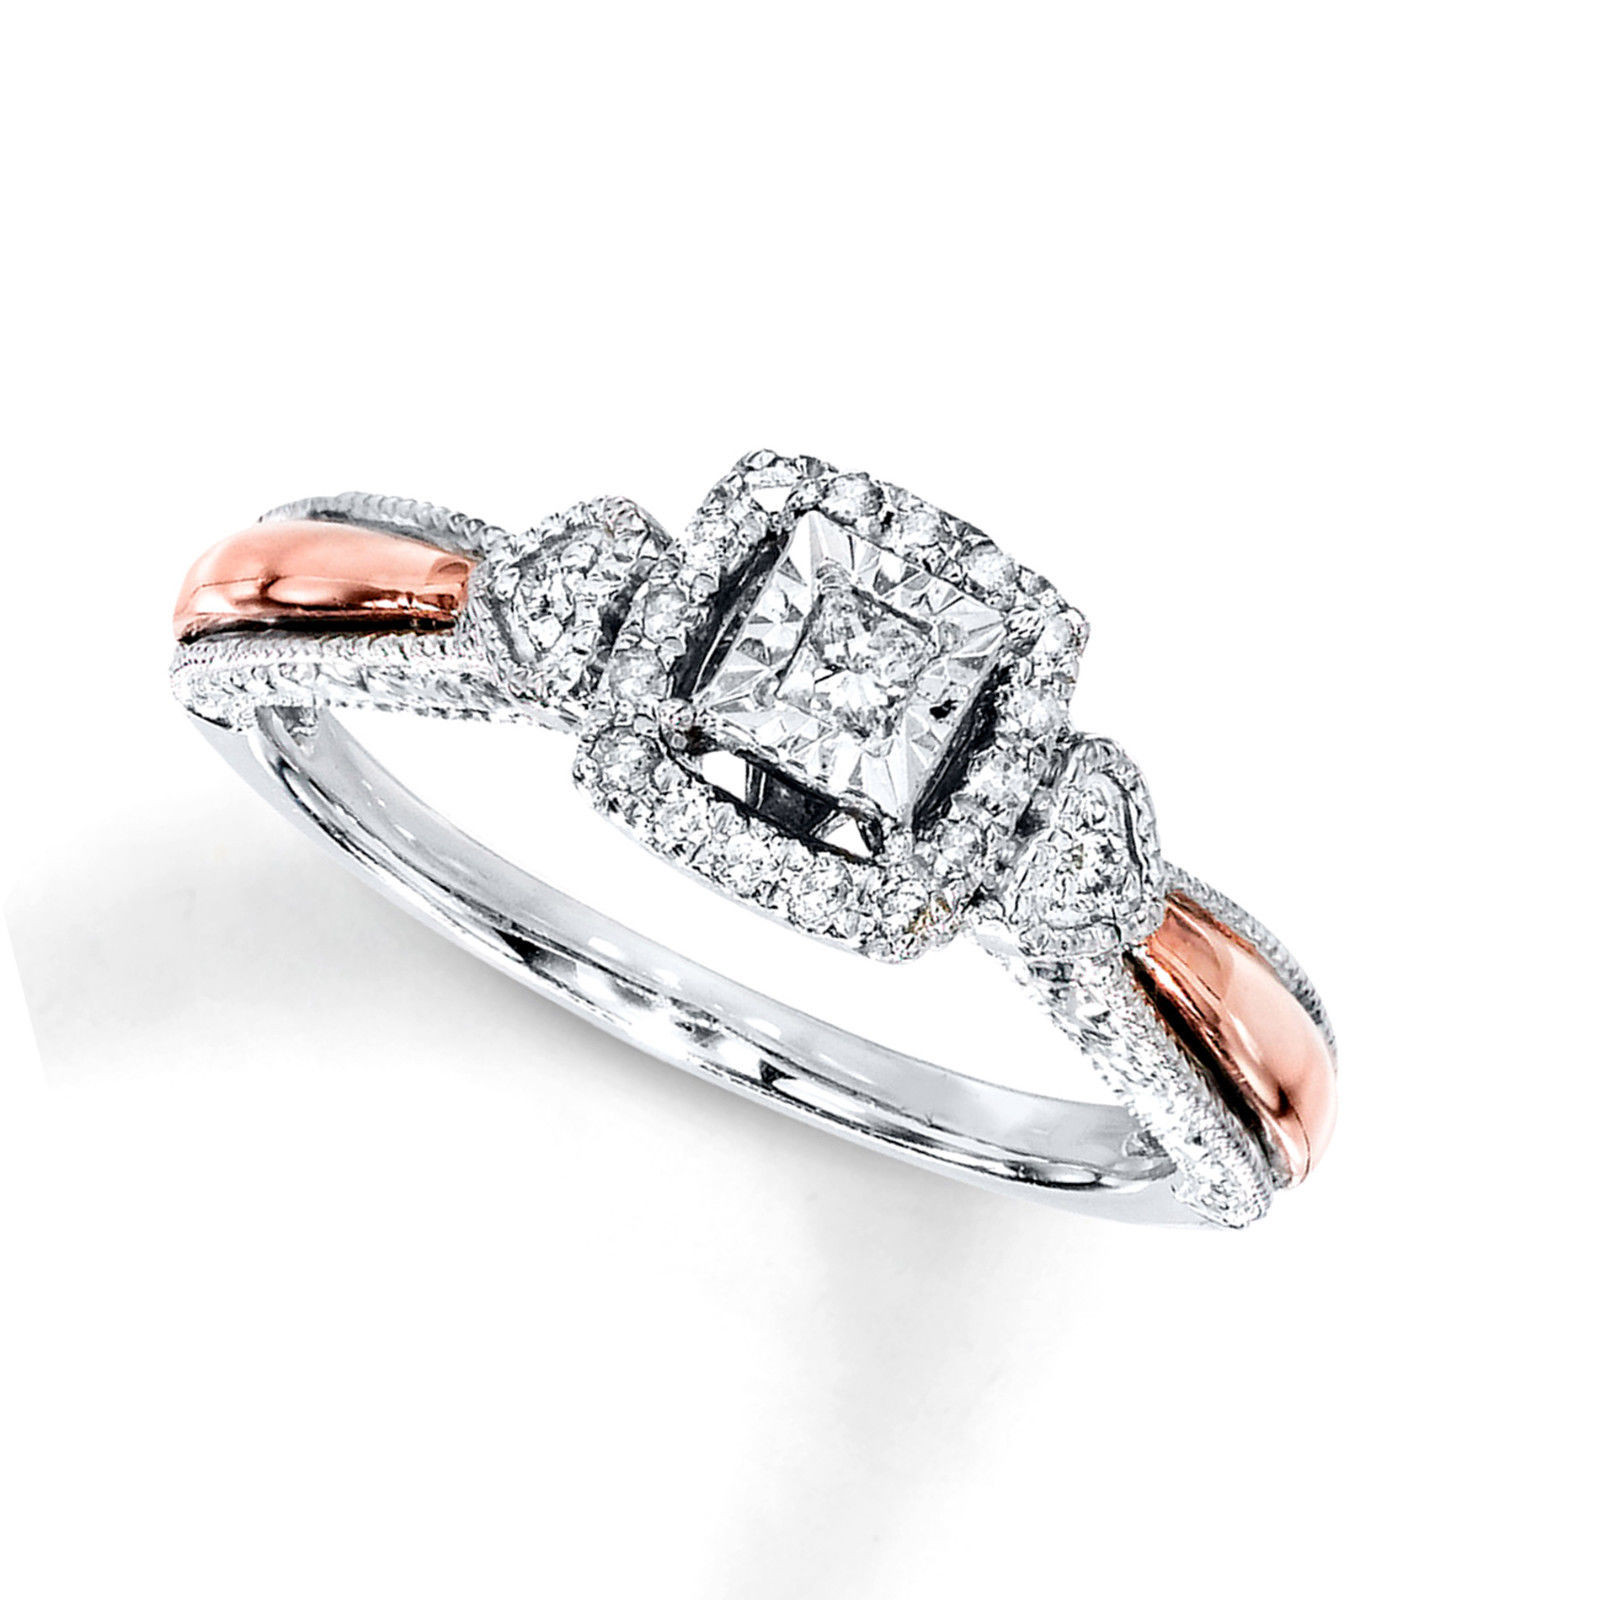 Diamond Promise Rings For Her
 1 6 Carat White Real Diamond Promise Ring Sterling Silver